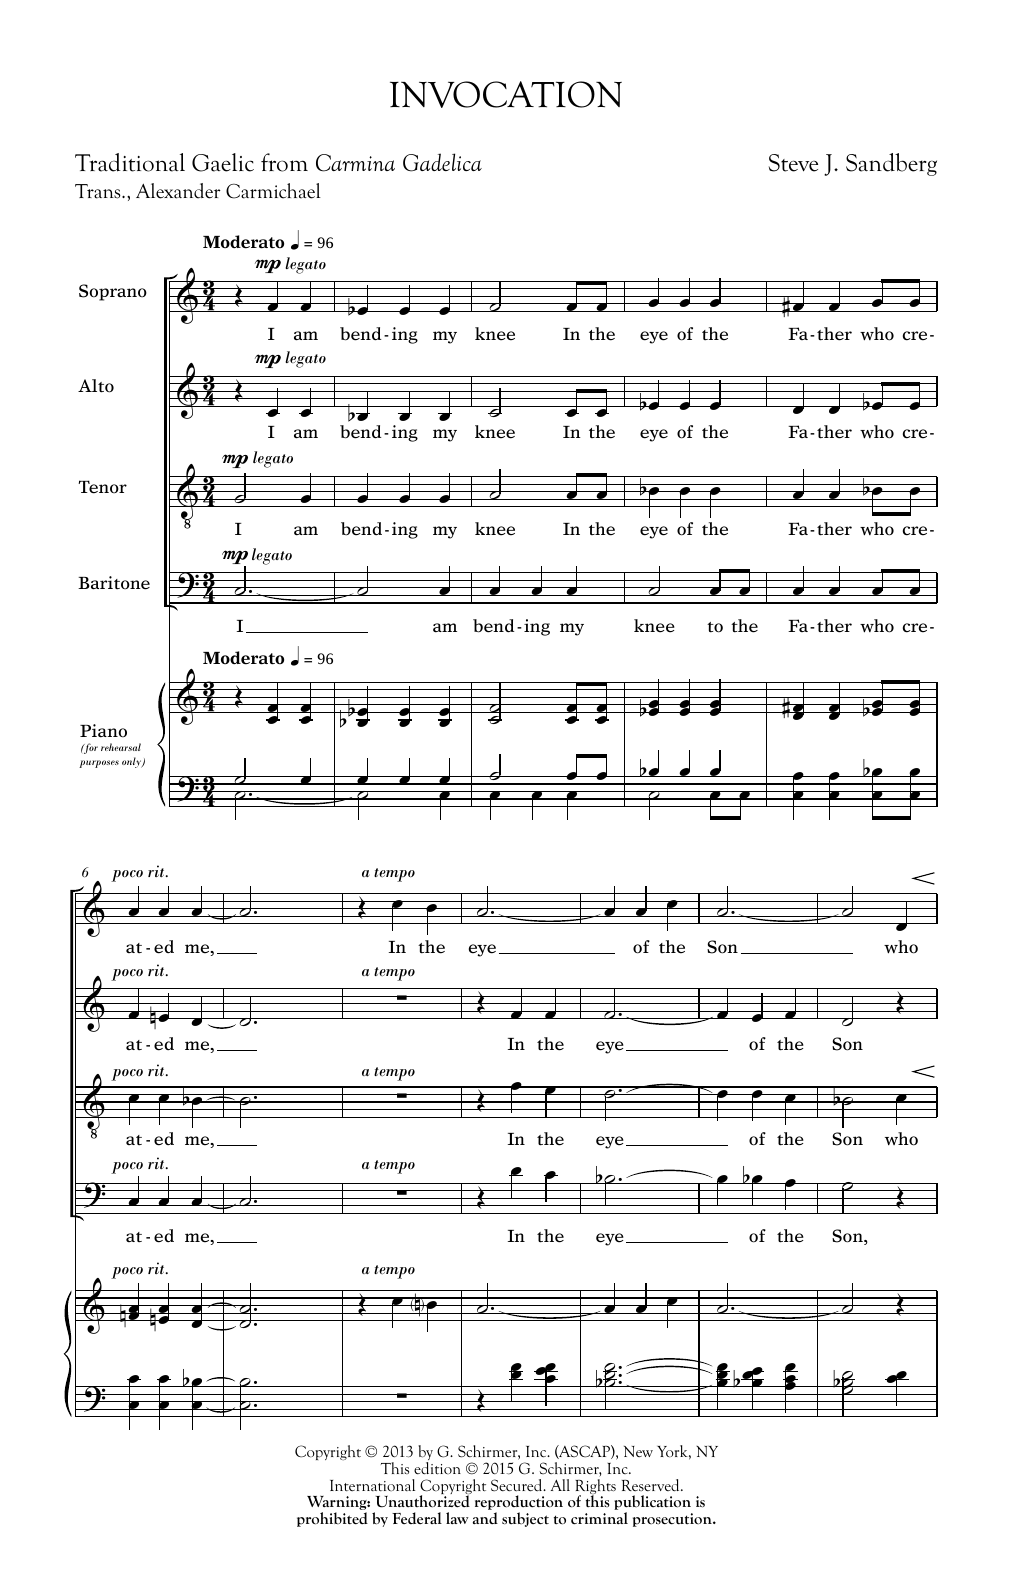 Steve Sandberg Invocation sheet music notes and chords arranged for SATB Choir